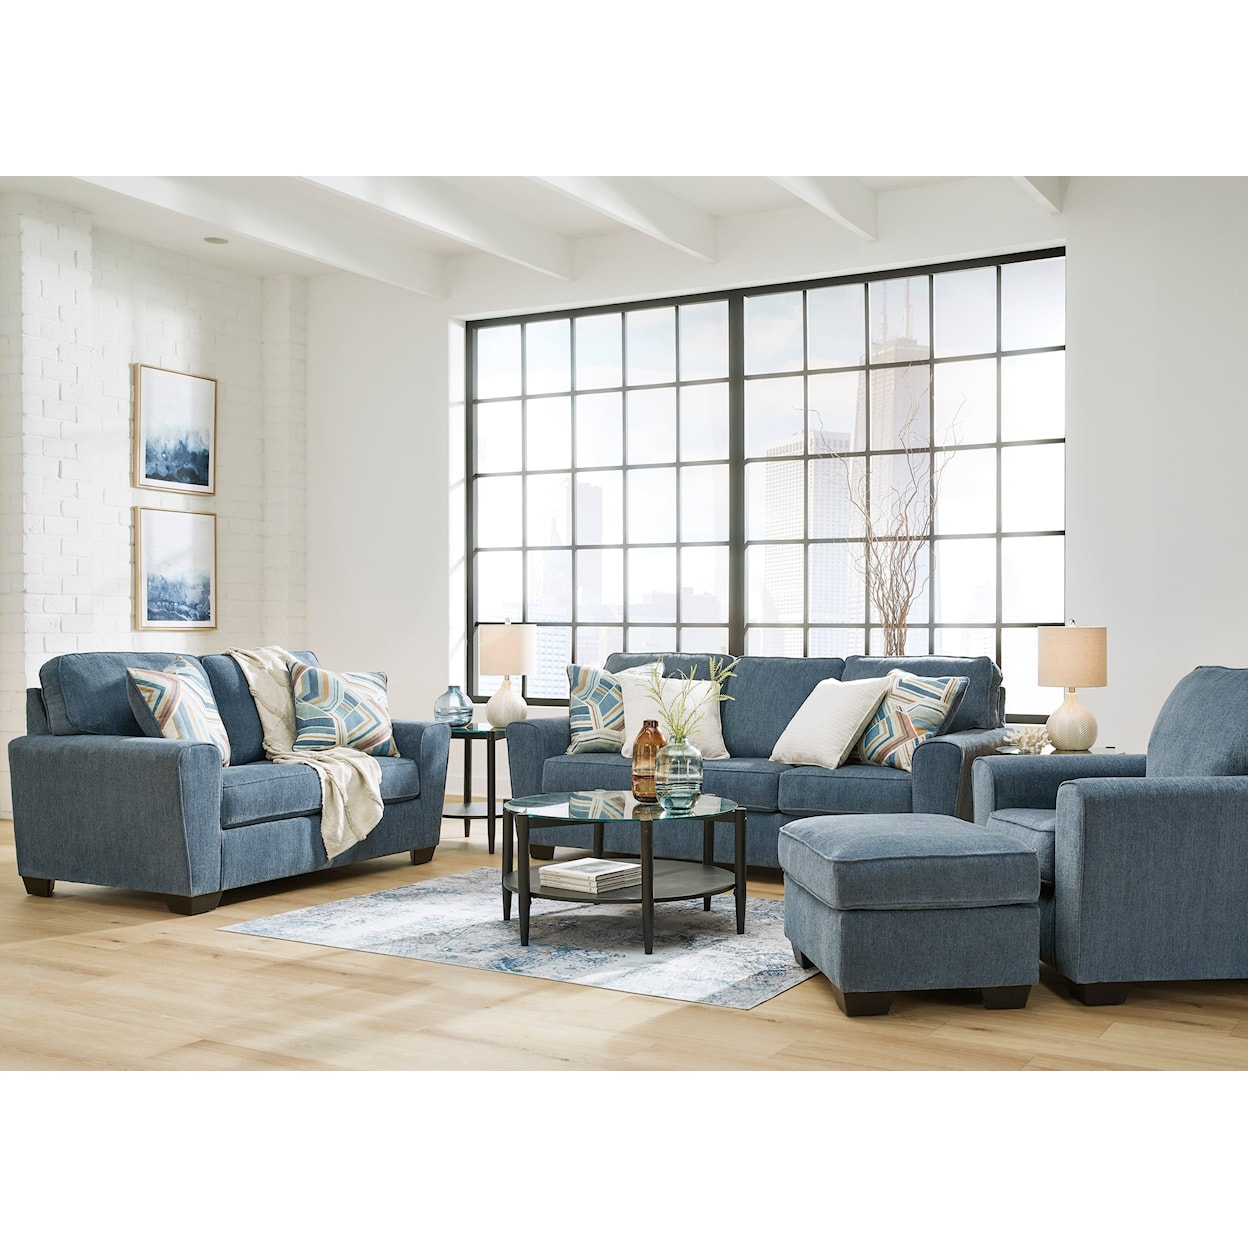 Ashley Furniture Signature Design Cashton Living Room Set